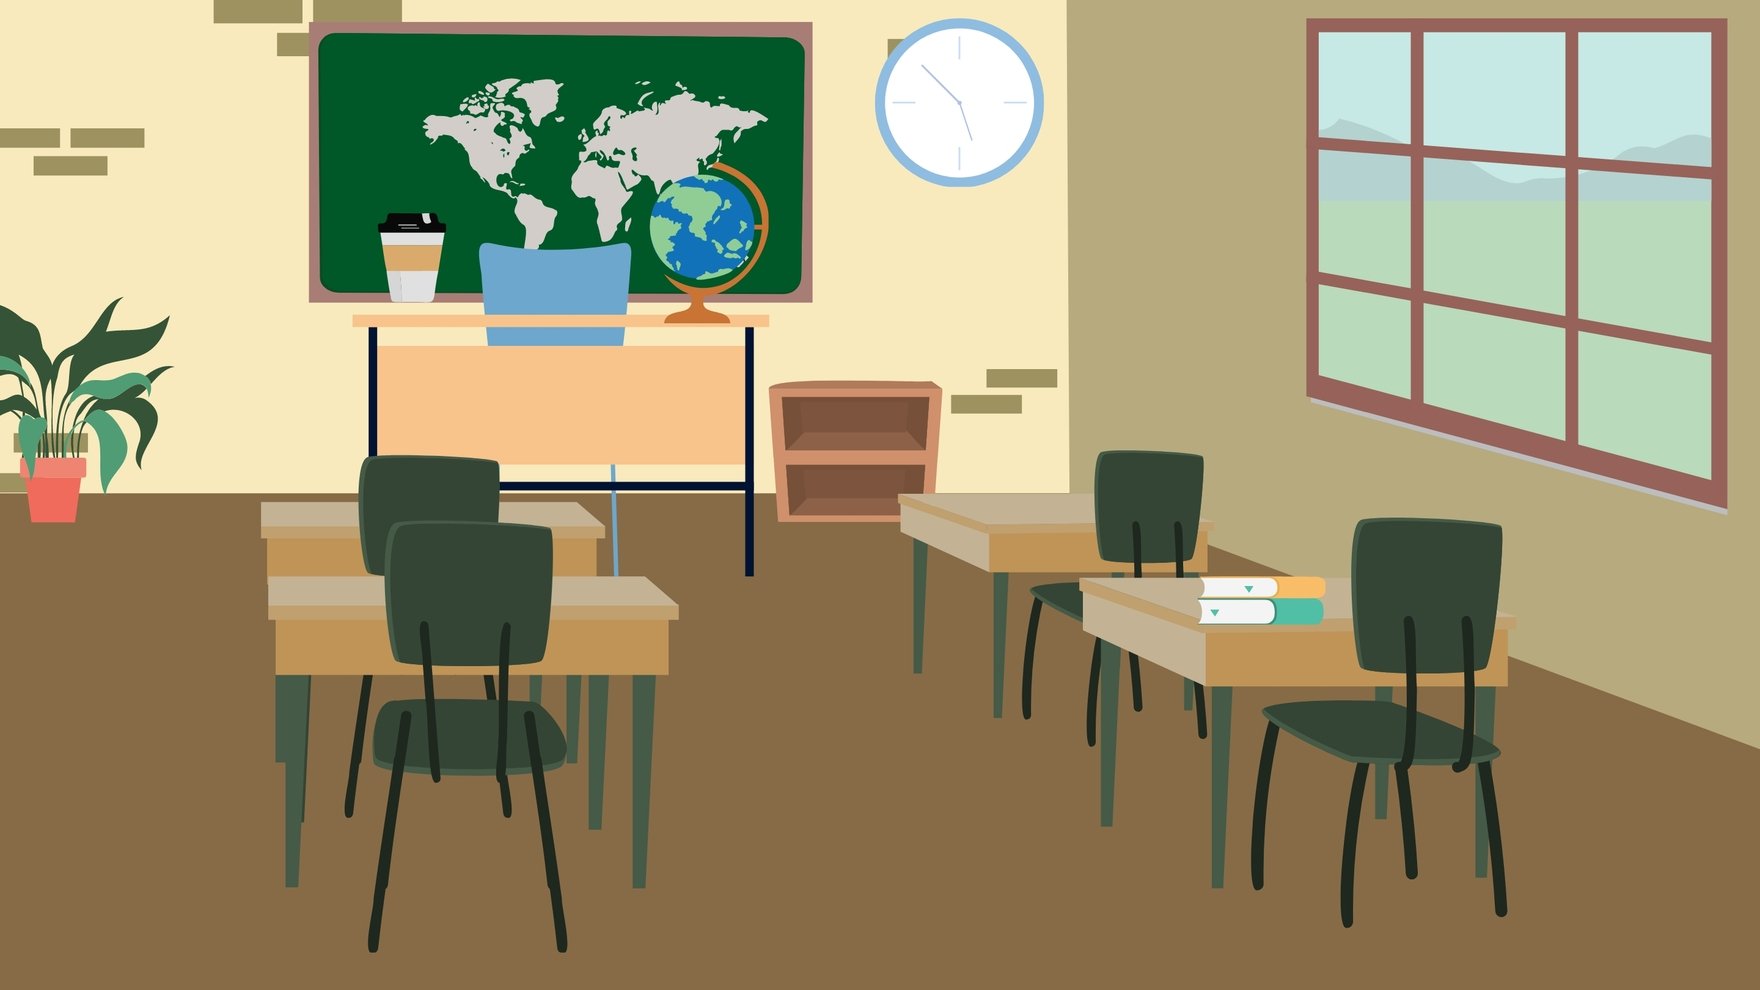 Free 3d Classroom Background in Illustrator, EPS, SVG, JPG, PNG